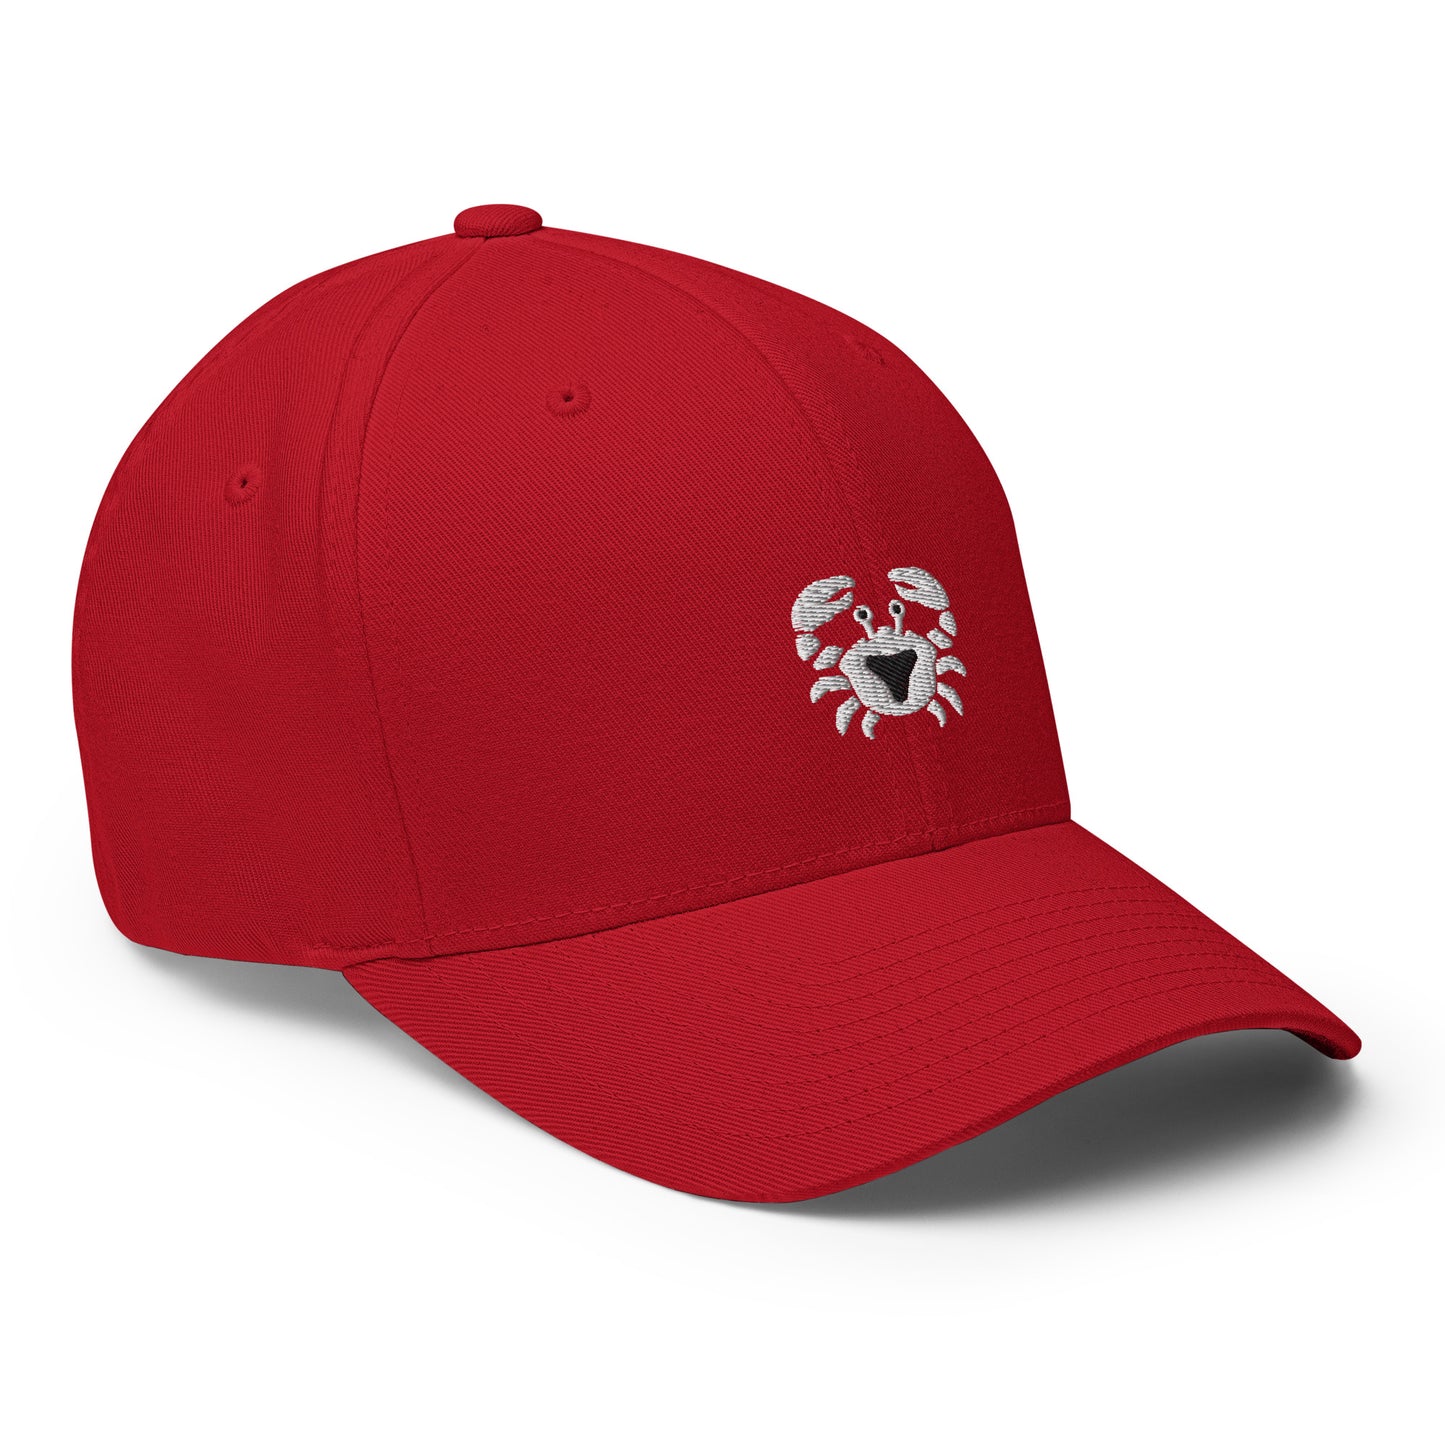 Baseball Cap with Cancer Symbol